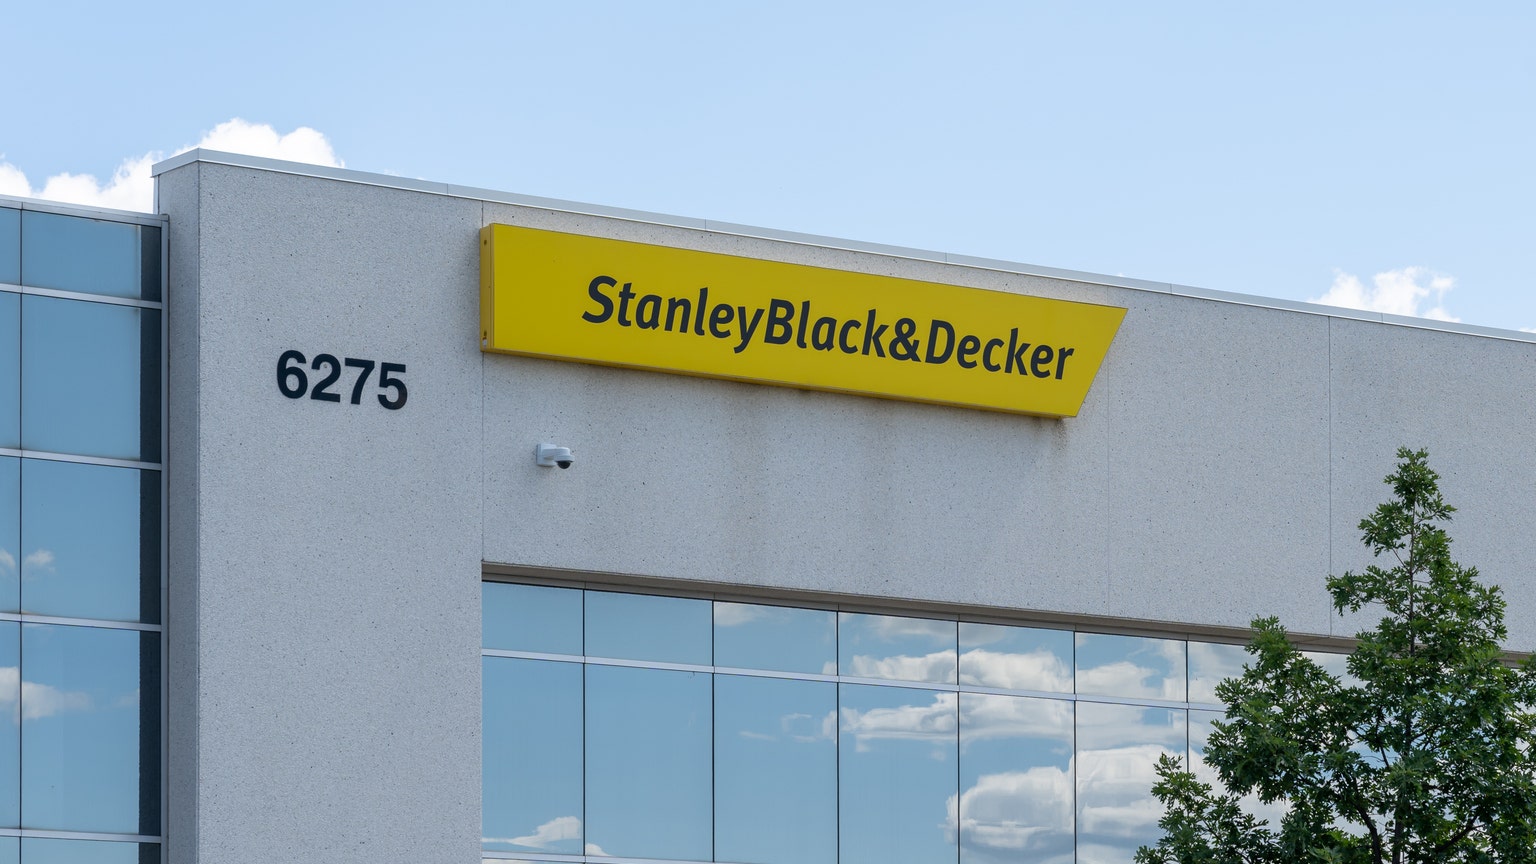 Stanley Black & Decker Posts Lower Profit, but Lifts Outlook - WSJ